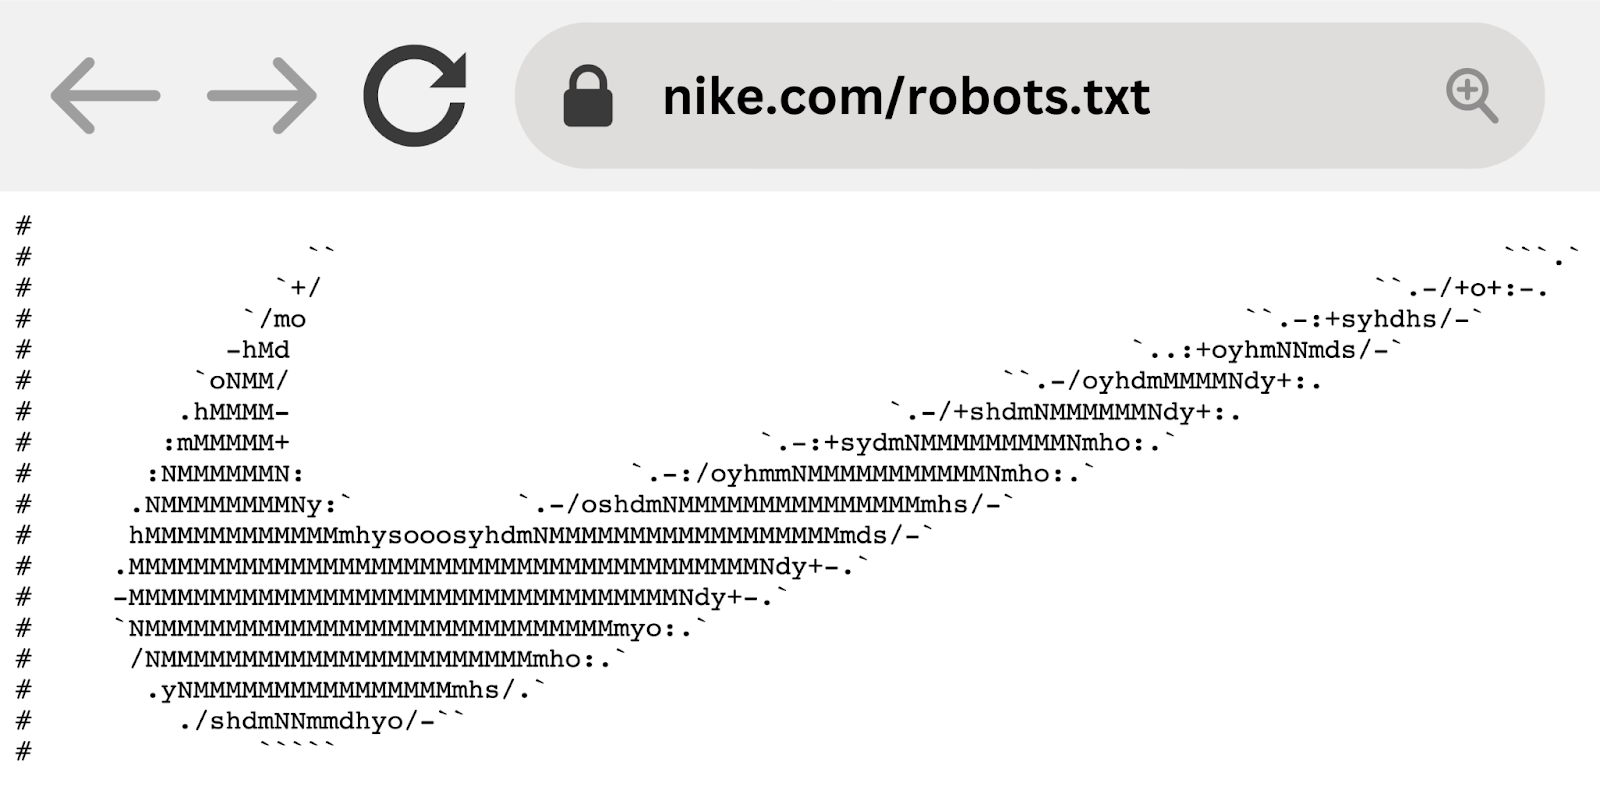 Nike’s robots.txt example